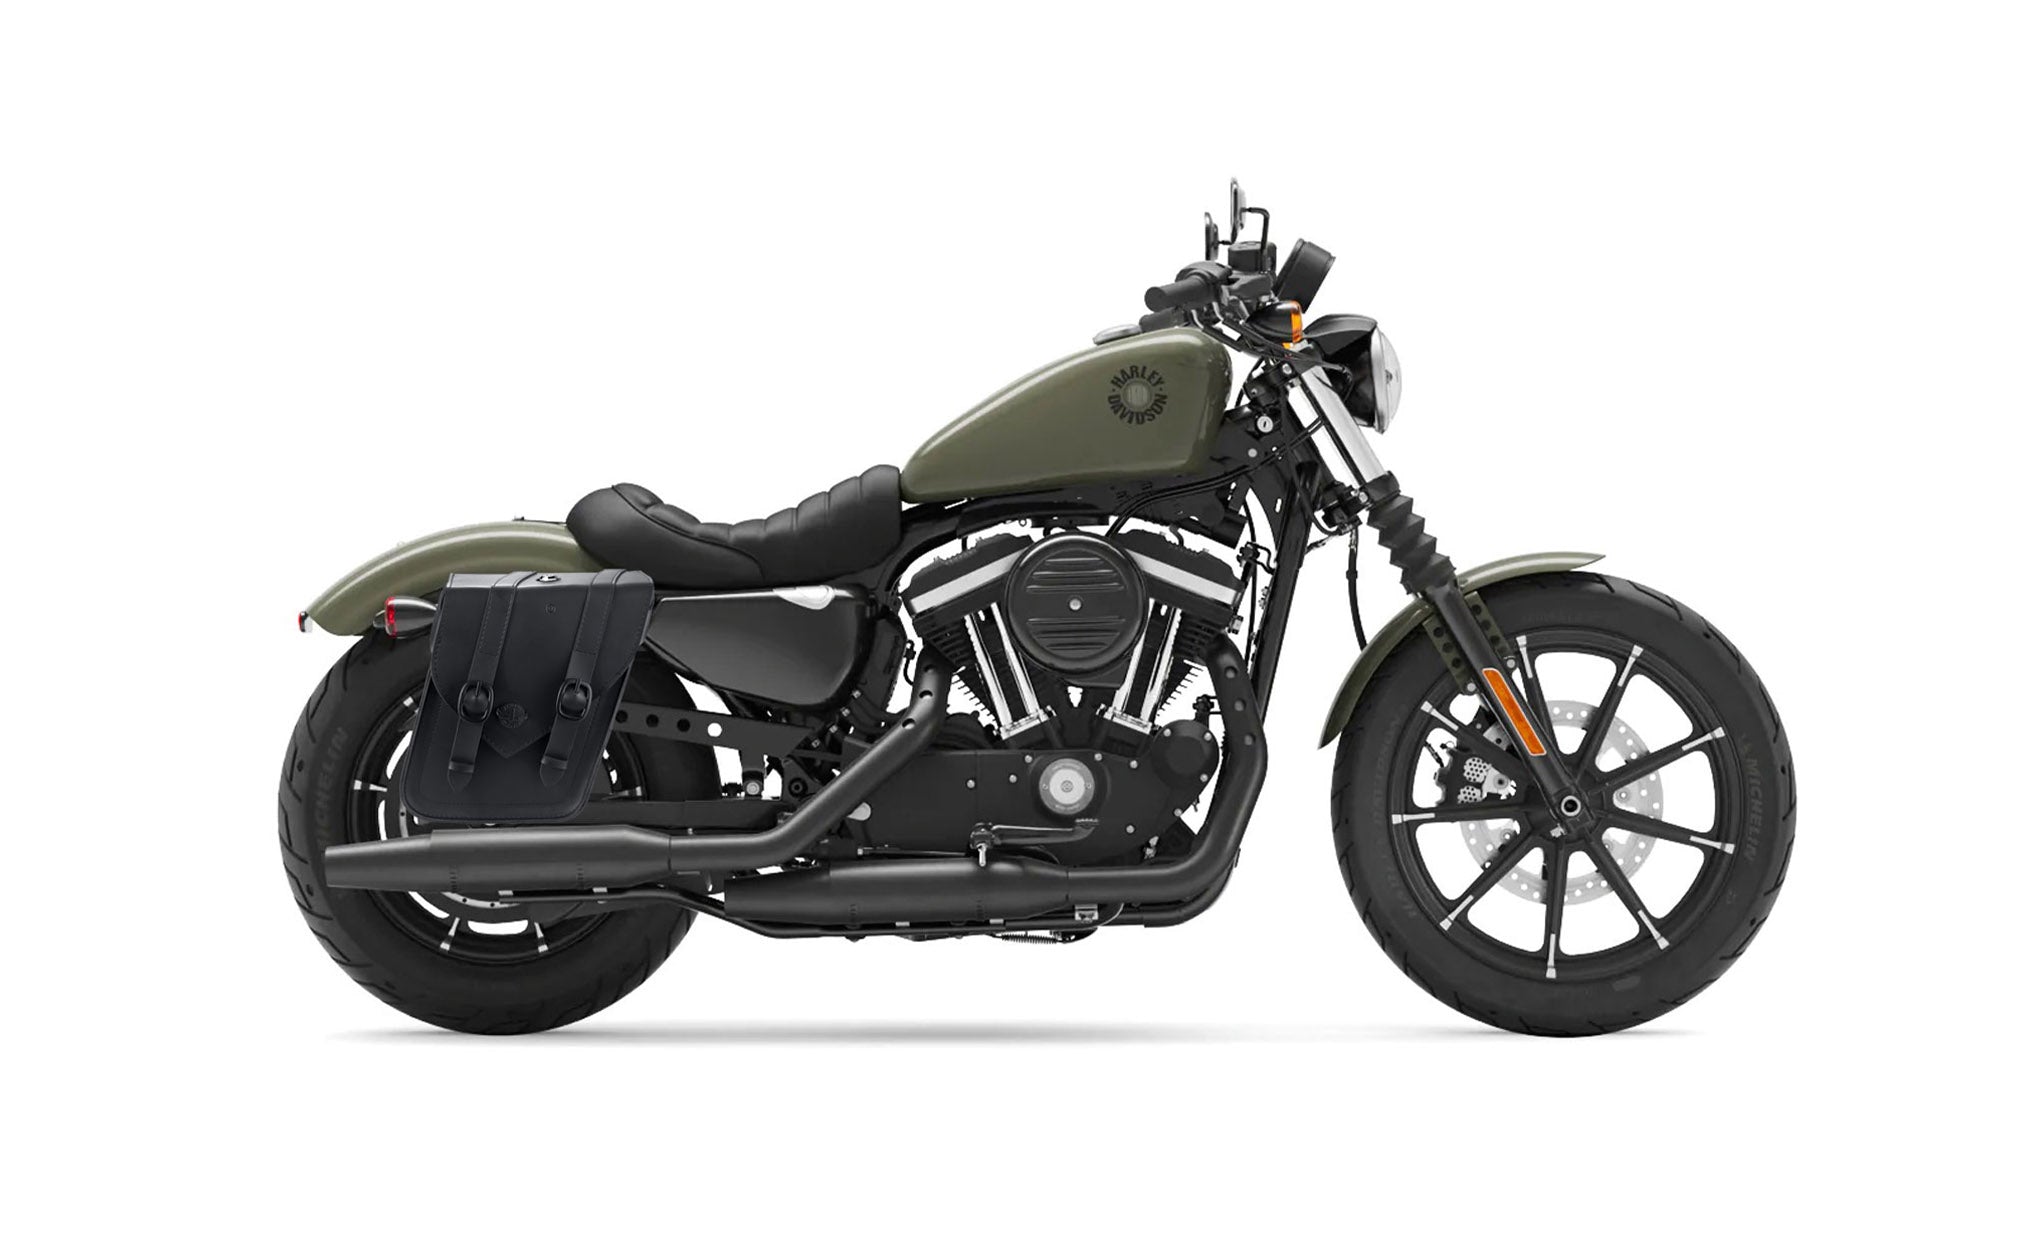 Viking Dark Age Medium Leather Motorcycle Saddlebags For Harley Sportster 883 Iron Xl883N on Bike Photo @expand